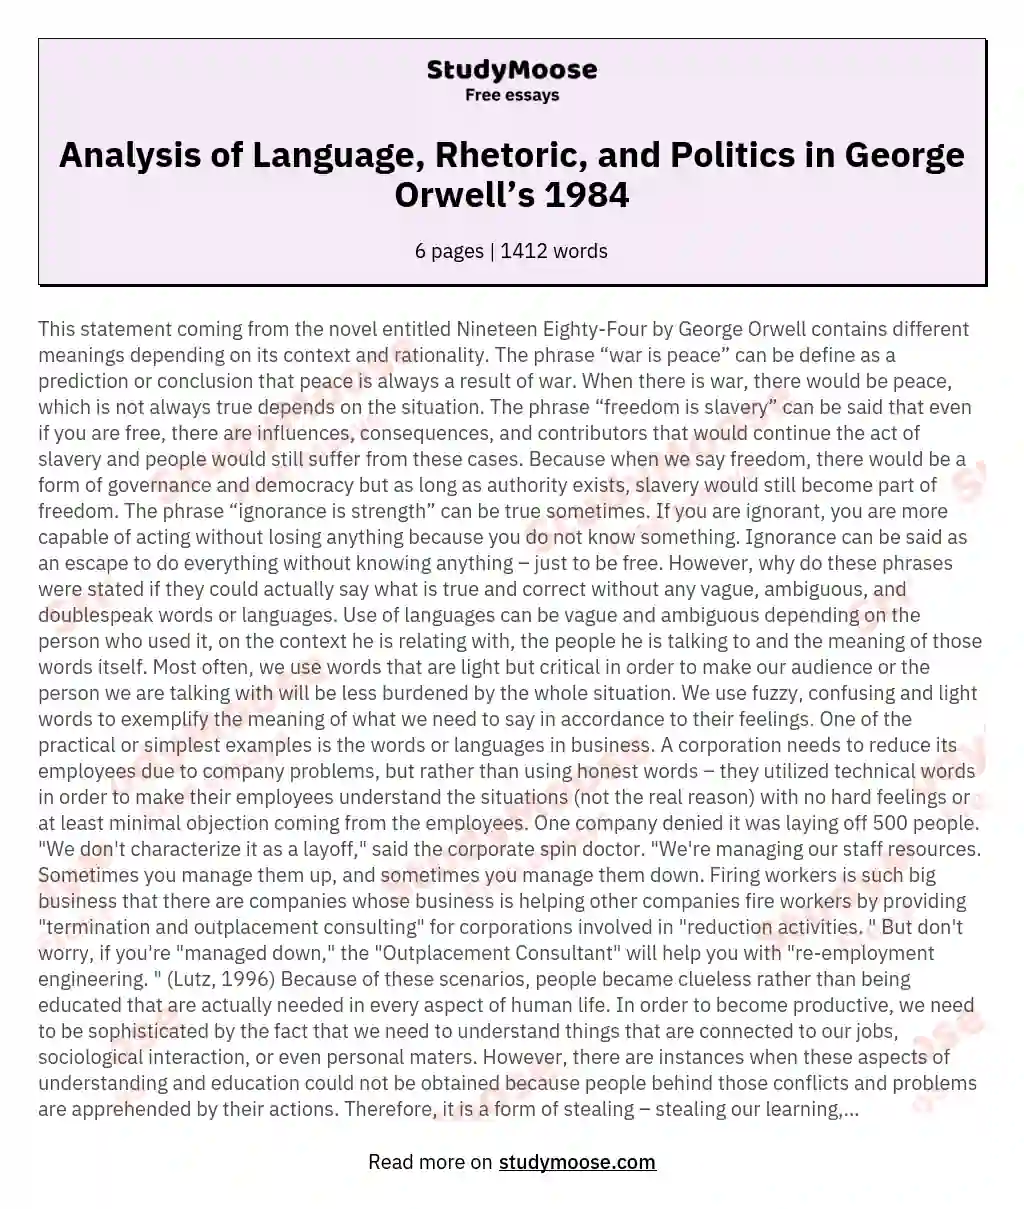 Analysis of Language, Rhetoric, and Politics in George Orwell’s 1984 essay